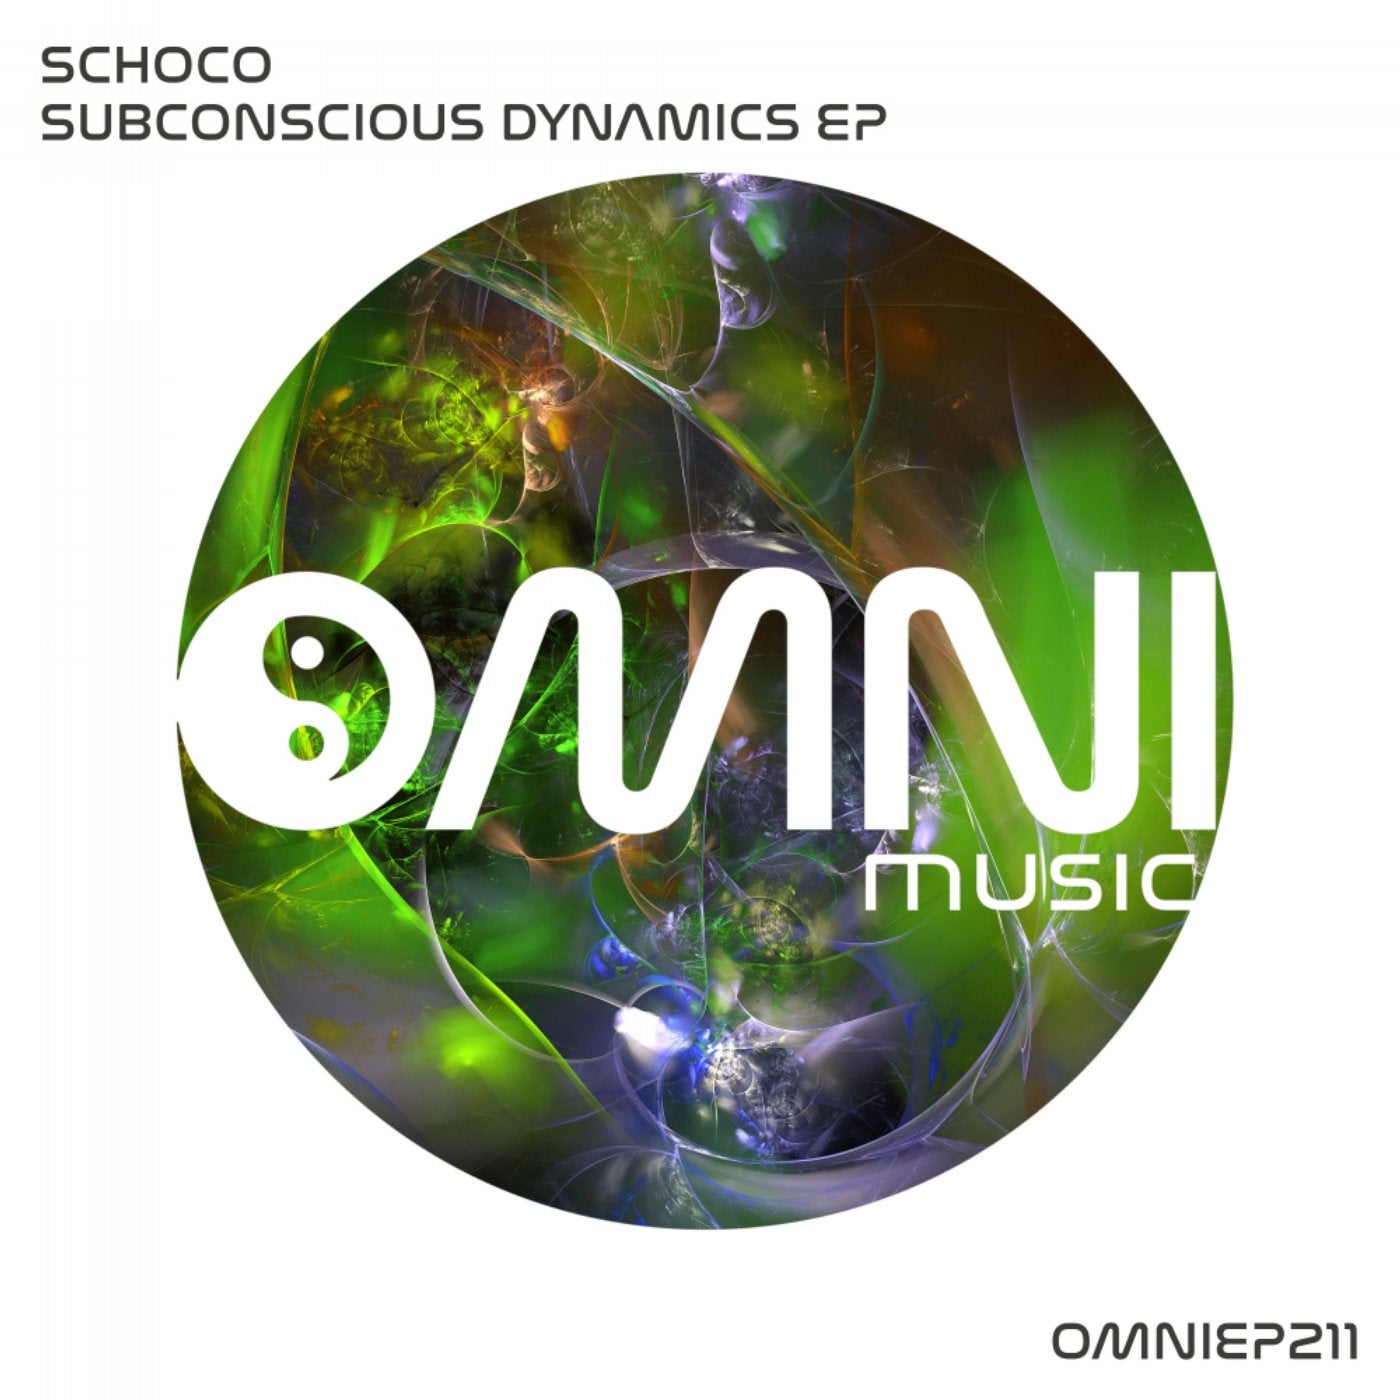 Subconscious Dynamics EP